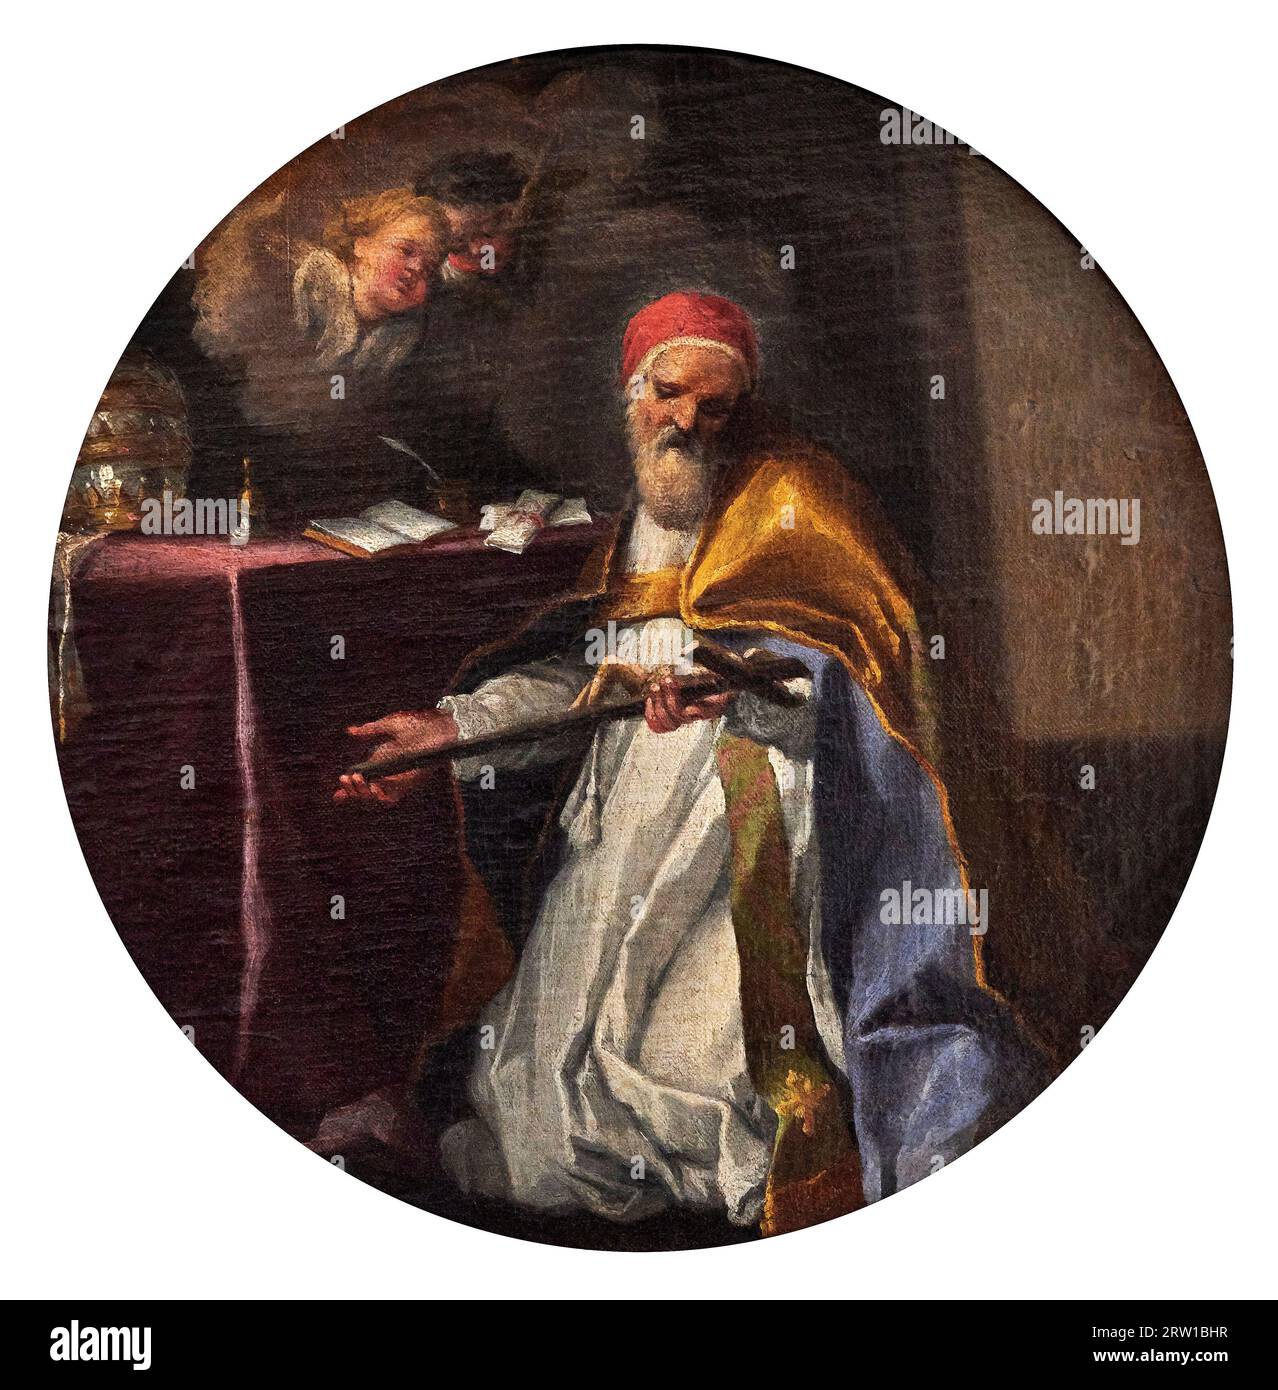 Papa Pio V  - olio su tela - Luigi Garzi  - 1712 - Grosseto, Museo Archeologico e d’ Arte della Maremma Stock Photo